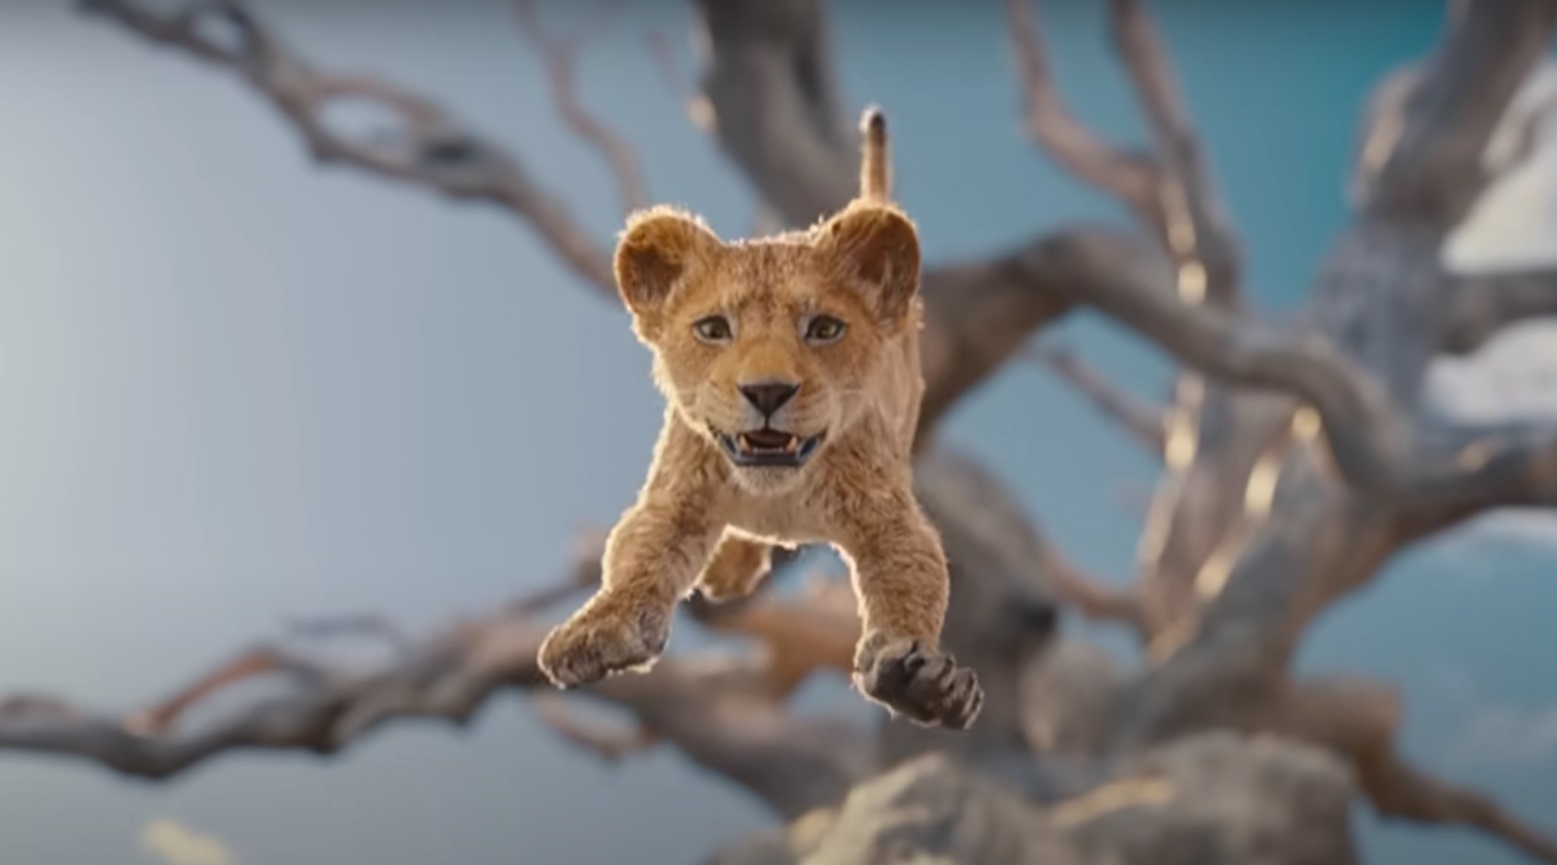 Danish star Mads Mikkelsen scores major role in new Lion King